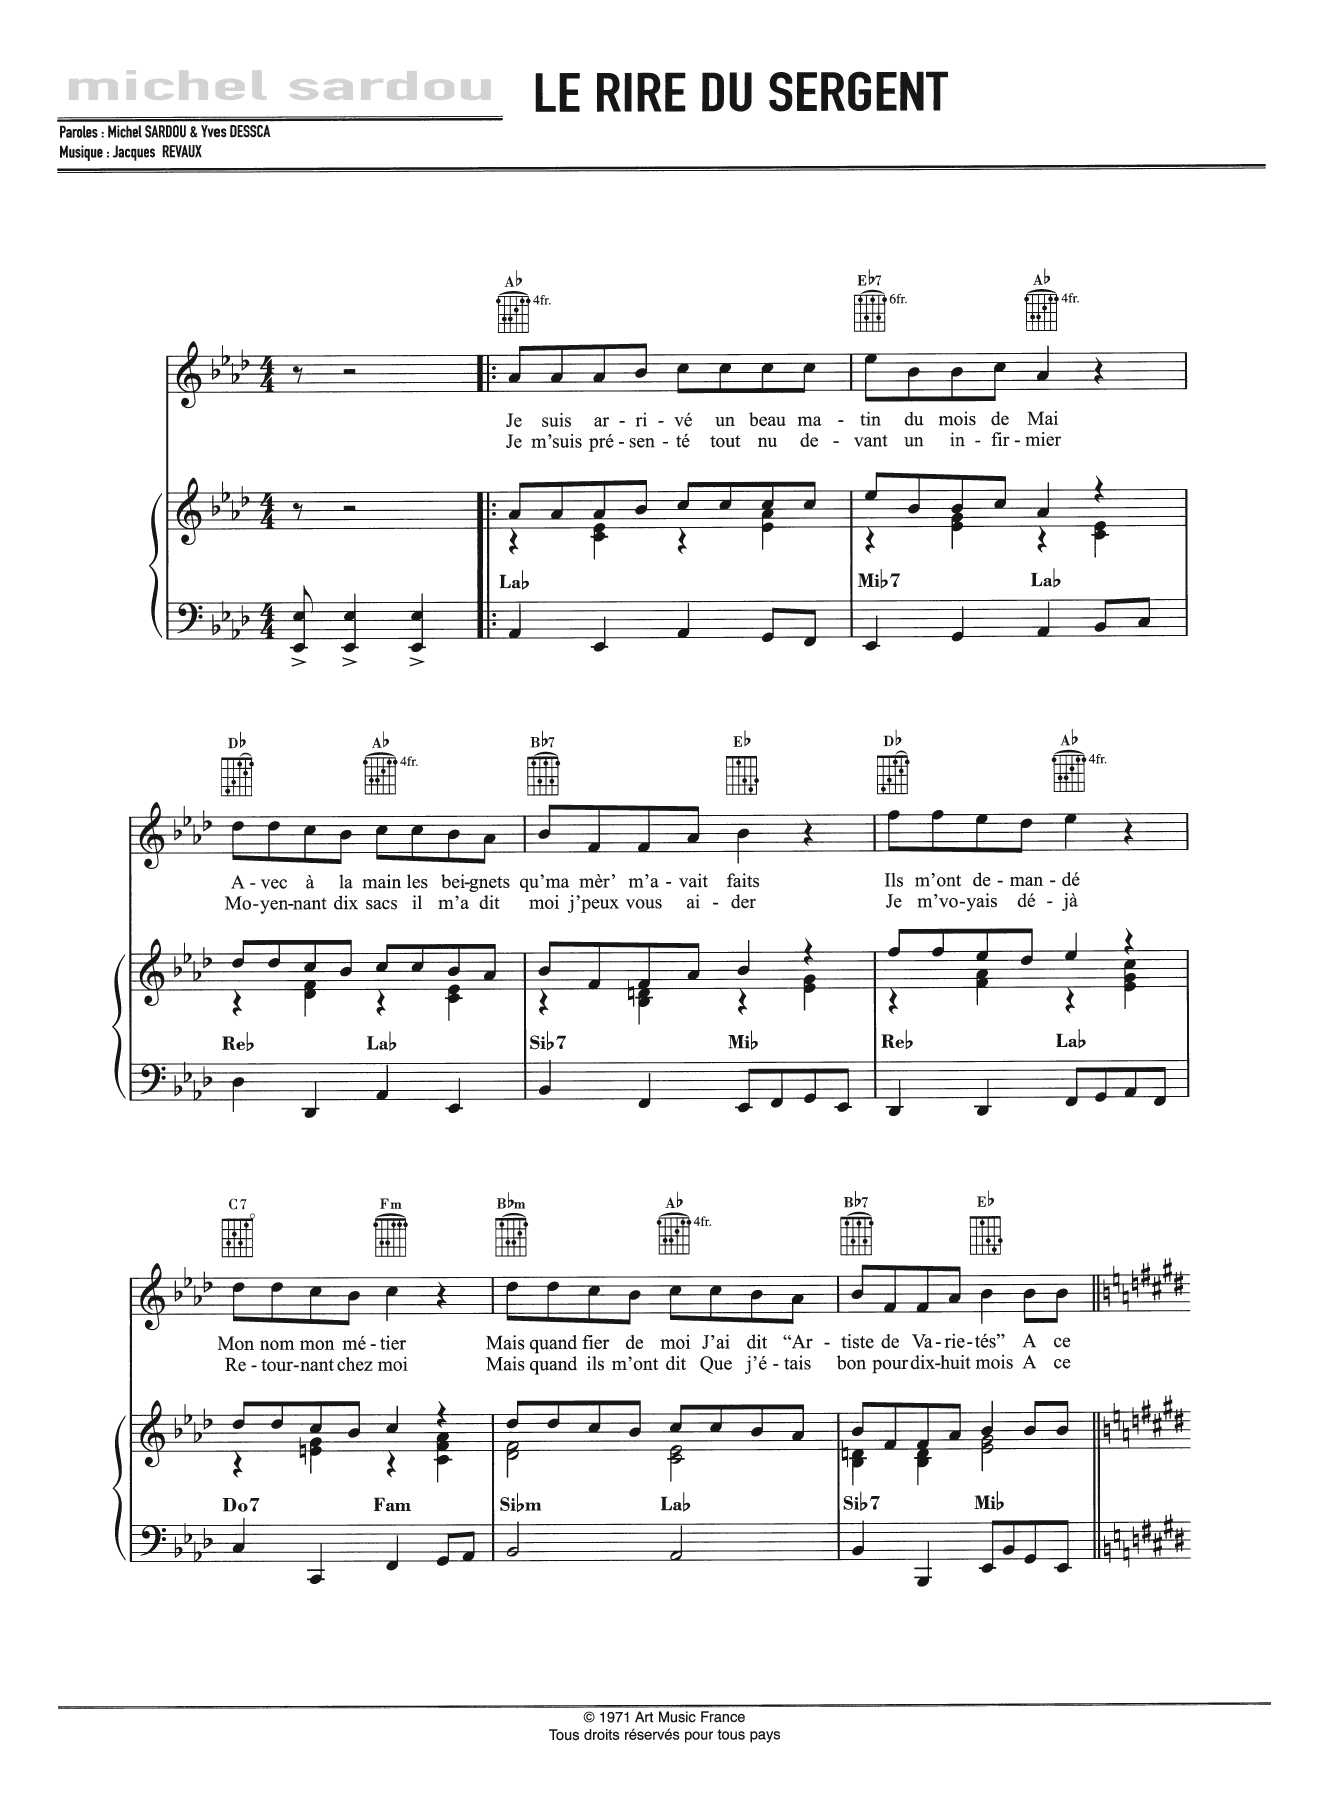 Michel Sardou Le Rire Du Sergent Sheet Music Notes & Chords for Piano, Vocal & Guitar - Download or Print PDF